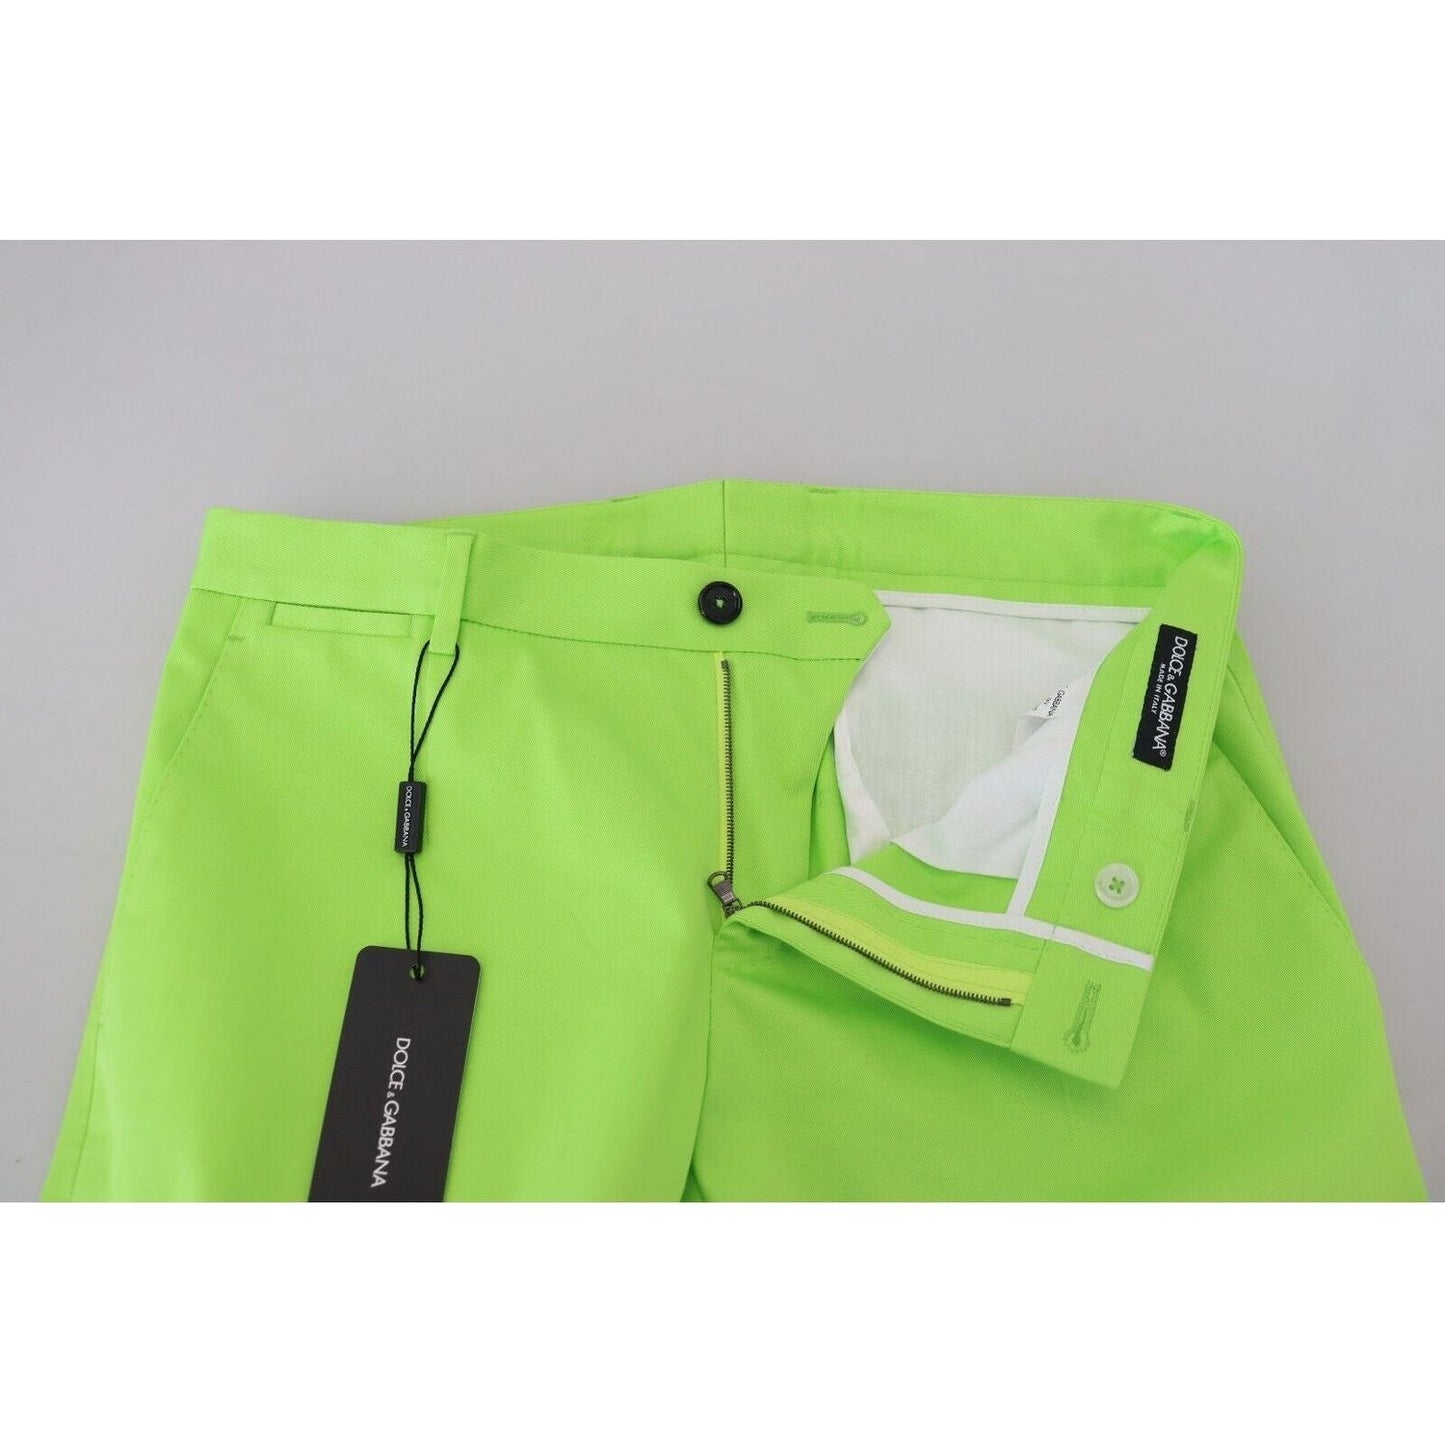 Dolce & Gabbana Elegant Light Green Cotton Chinos light-green-cotton-skinny-men-trousers-pants